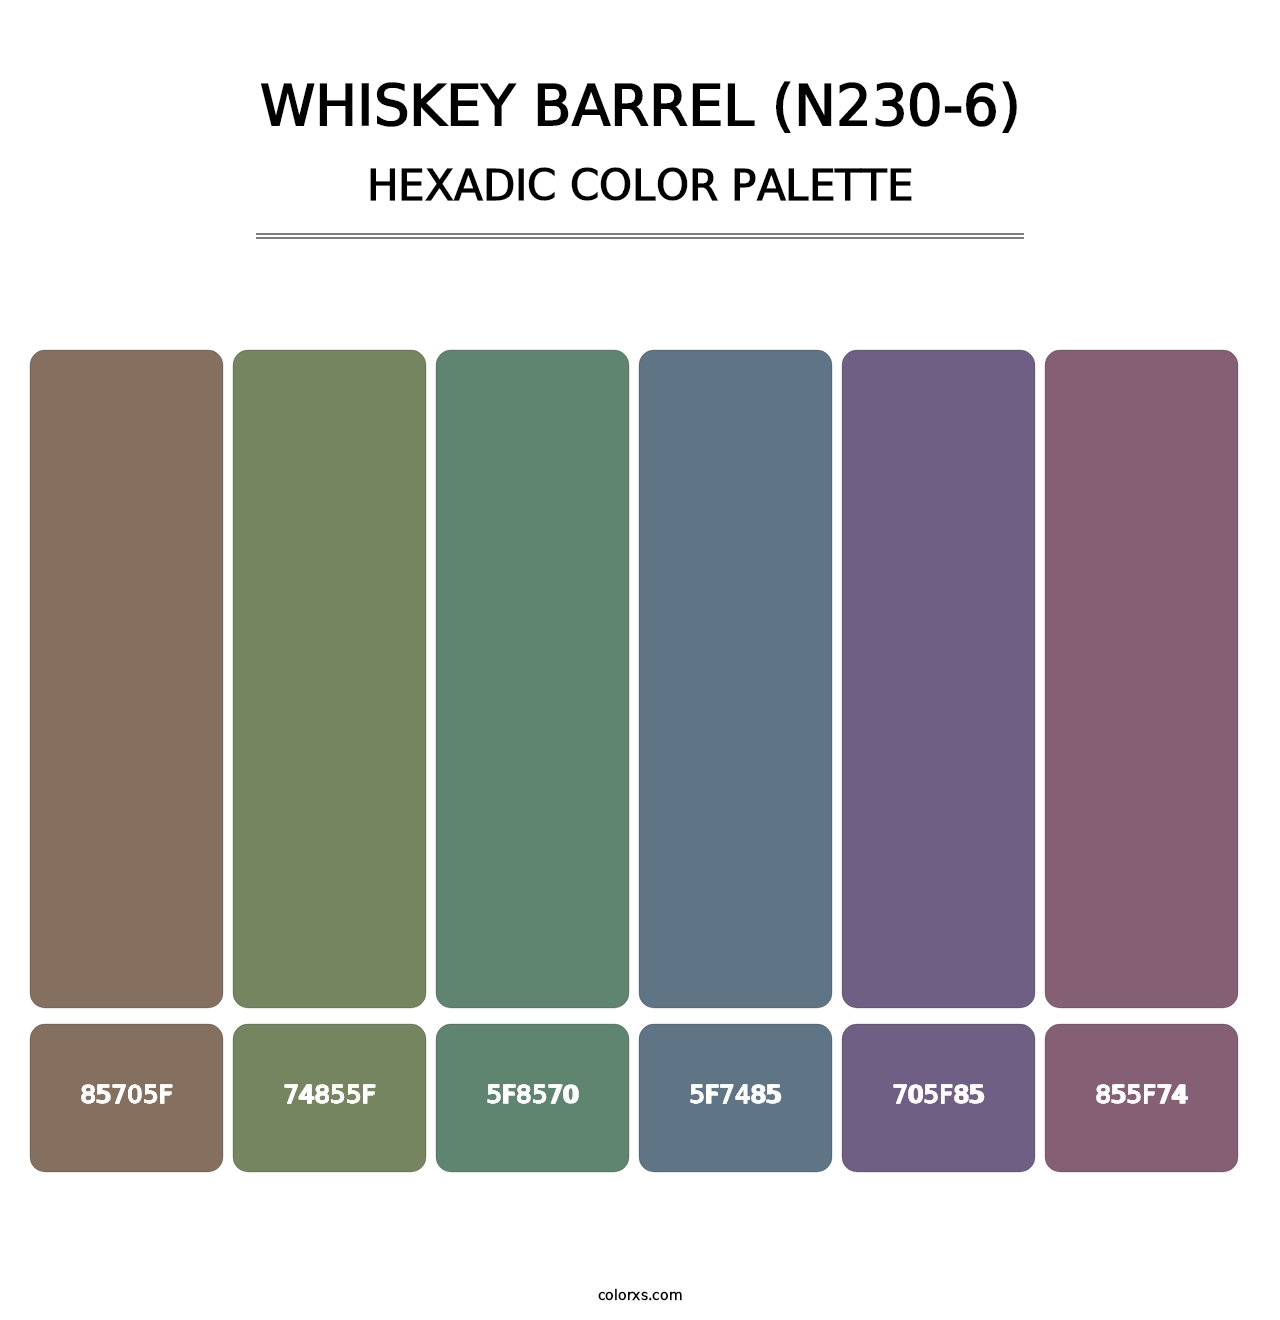 Whiskey Barrel (N230-6) - Hexadic Color Palette